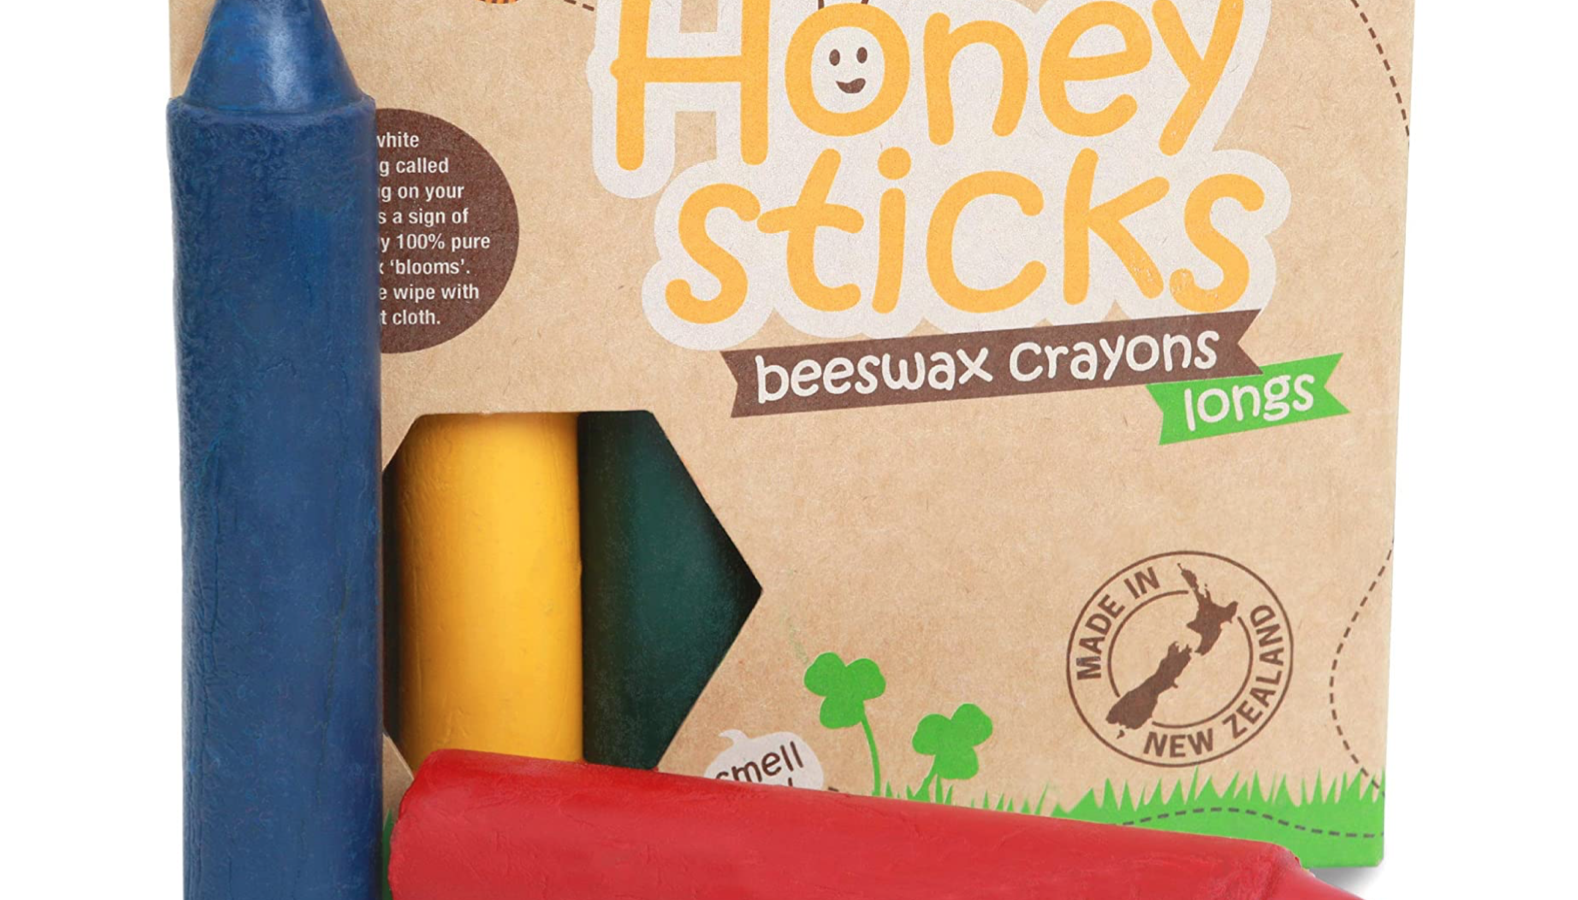 Honeysticks